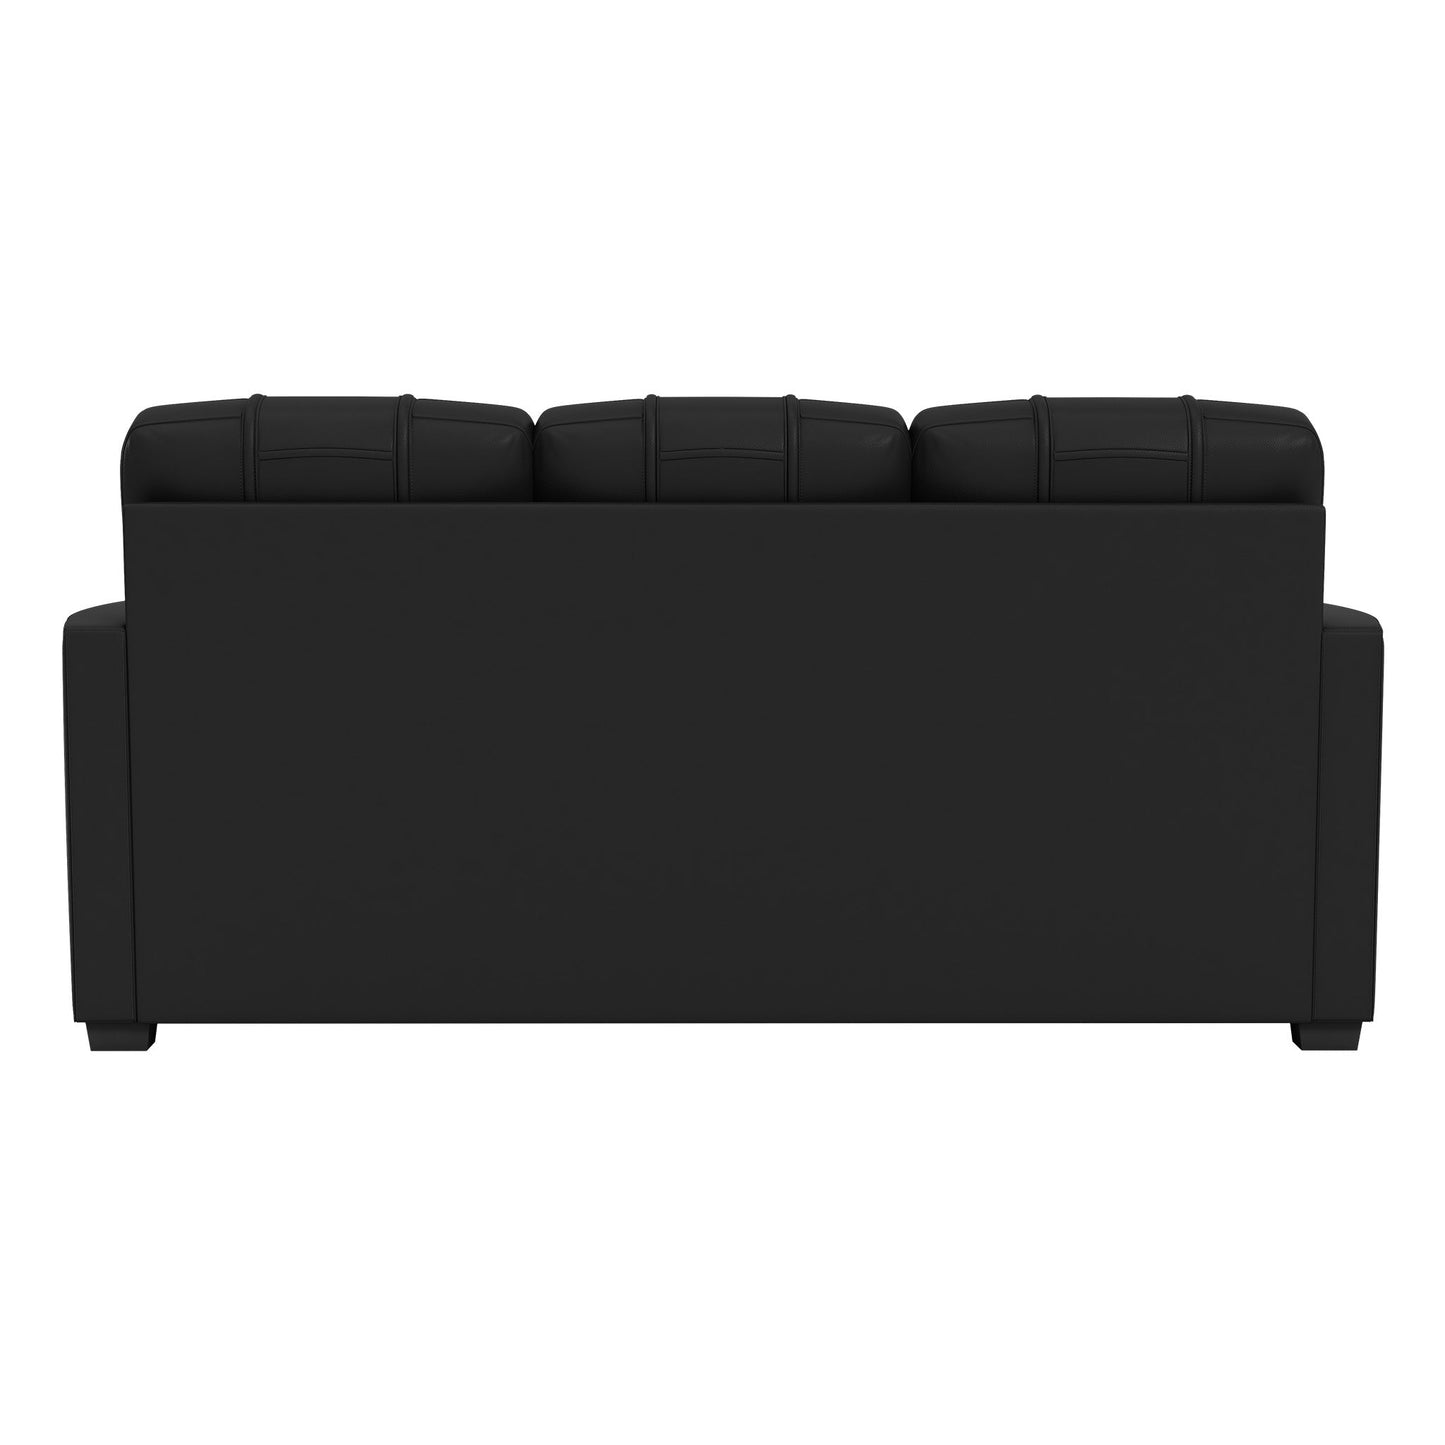 Silver Sofa with GMC Alternate Logo